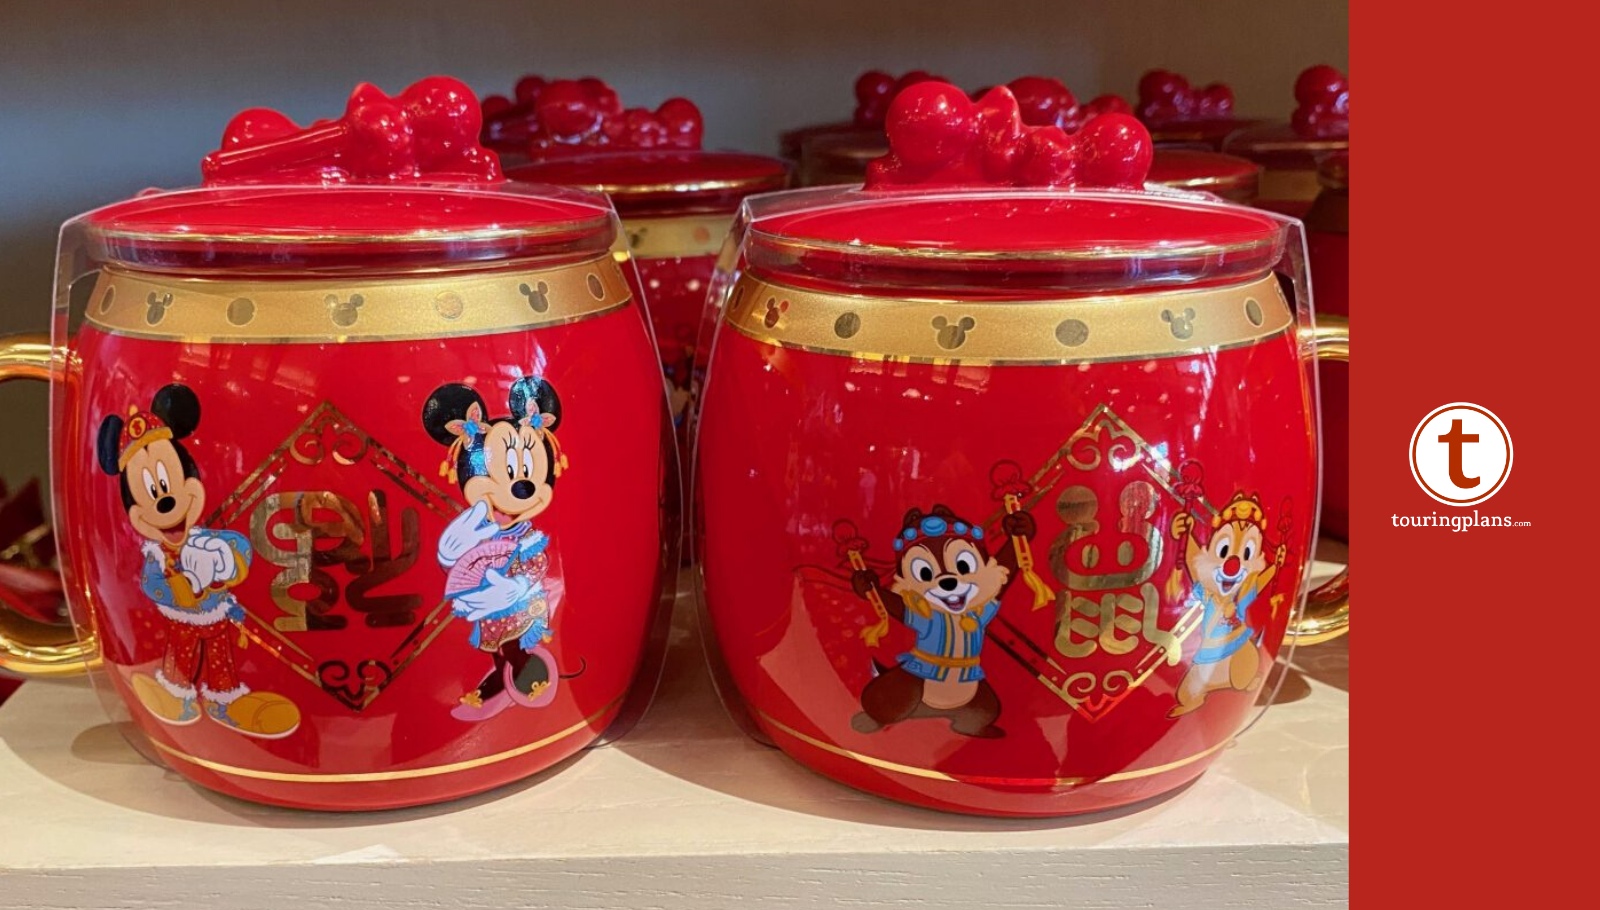 Disneyland Lunar New Year Merchandise Celebrates the Year of the